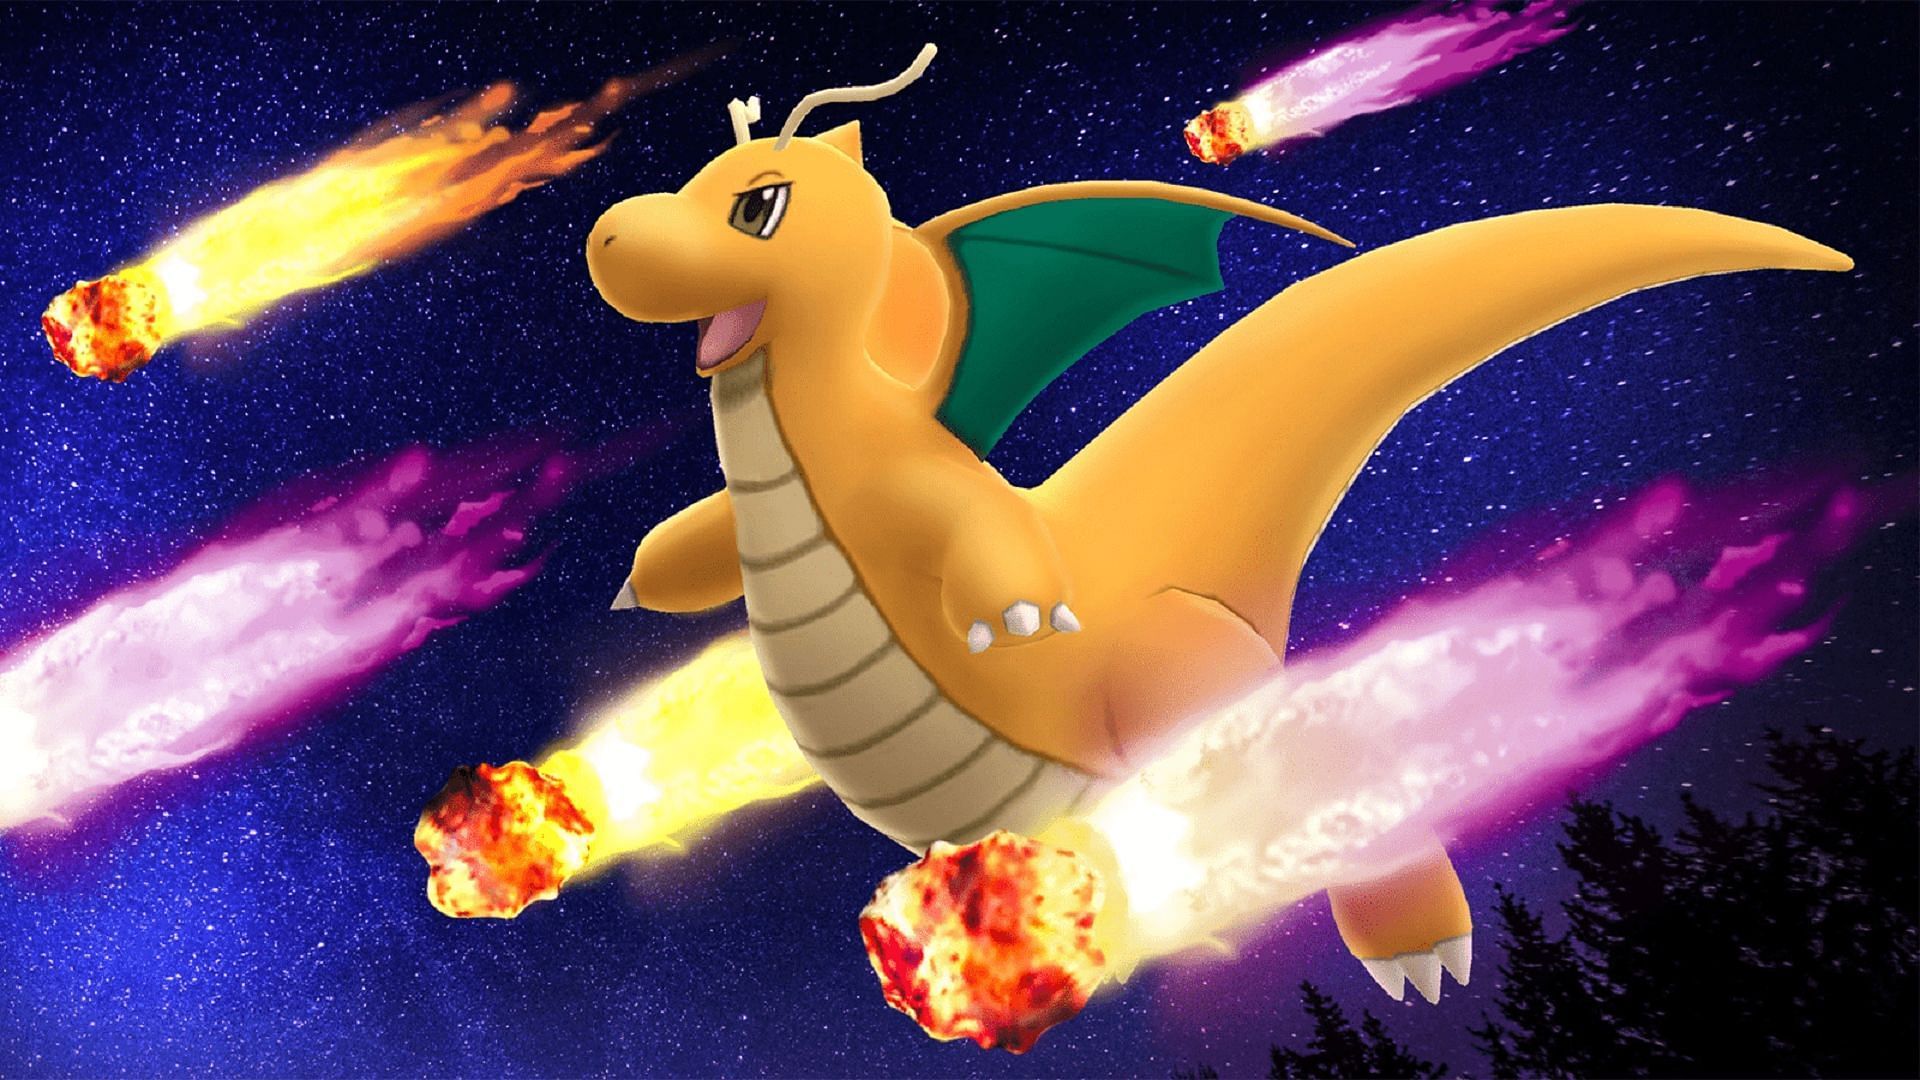 Dragonite can attack and defend brilliantly in Pokemon GO (Image via Niantic)